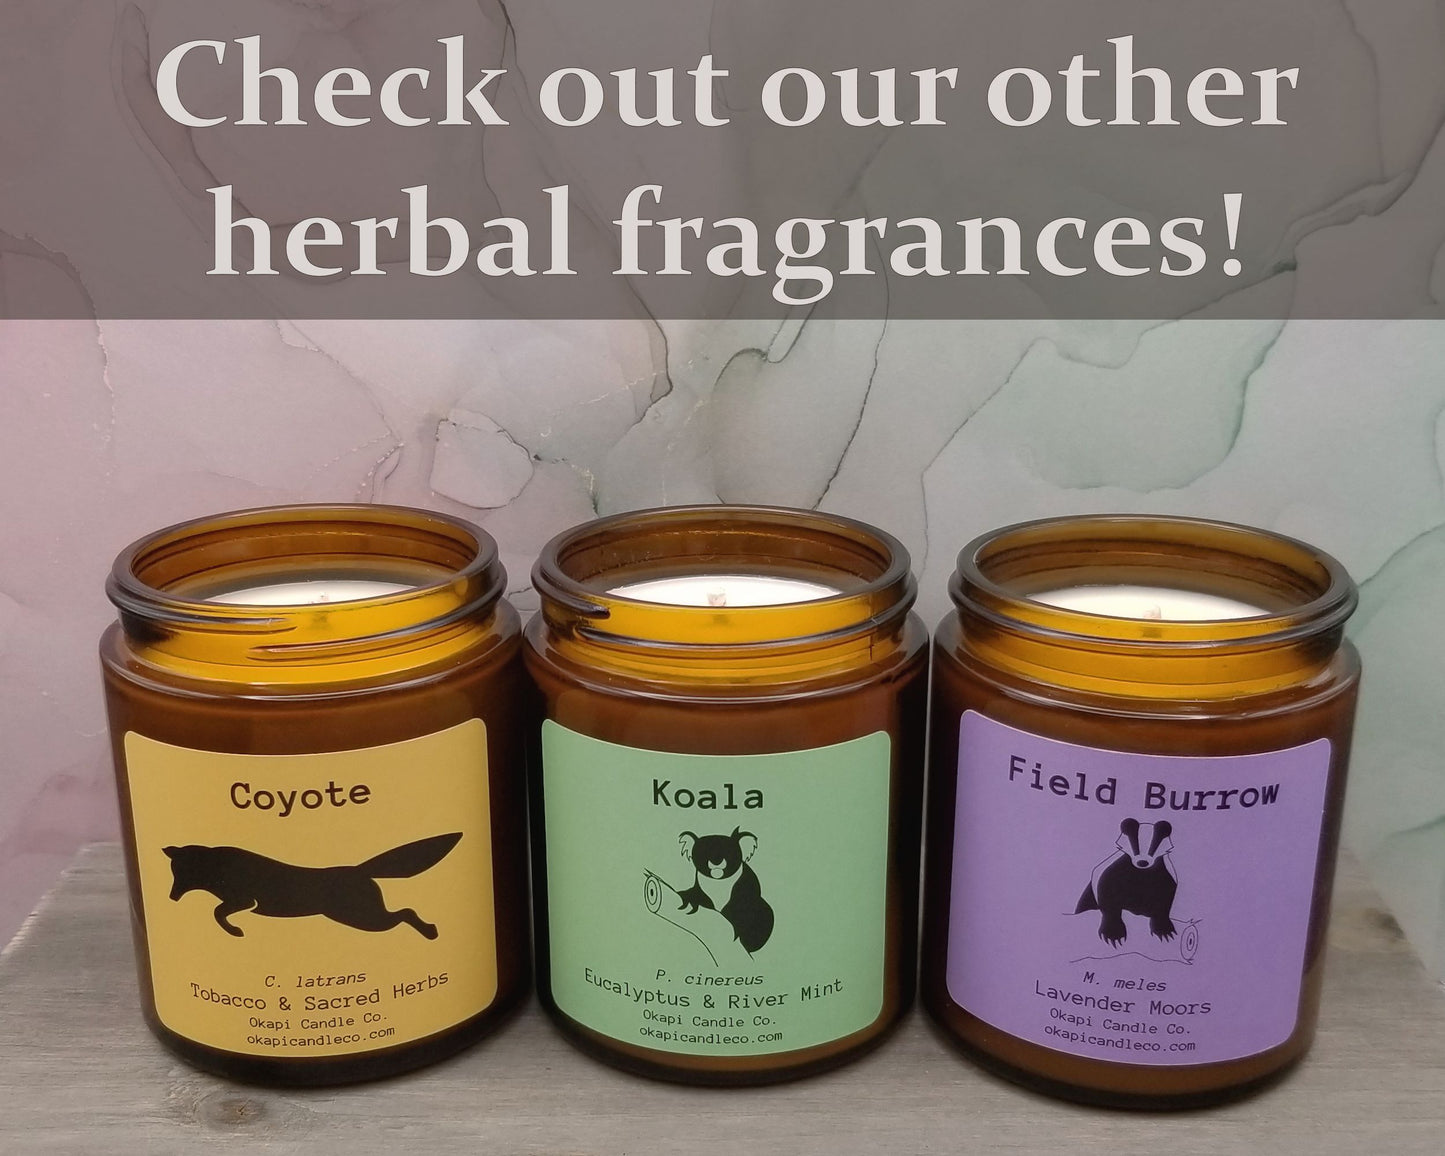 Field Burrow Badger Room & Linen Spray - Lavender Moors Fragrance